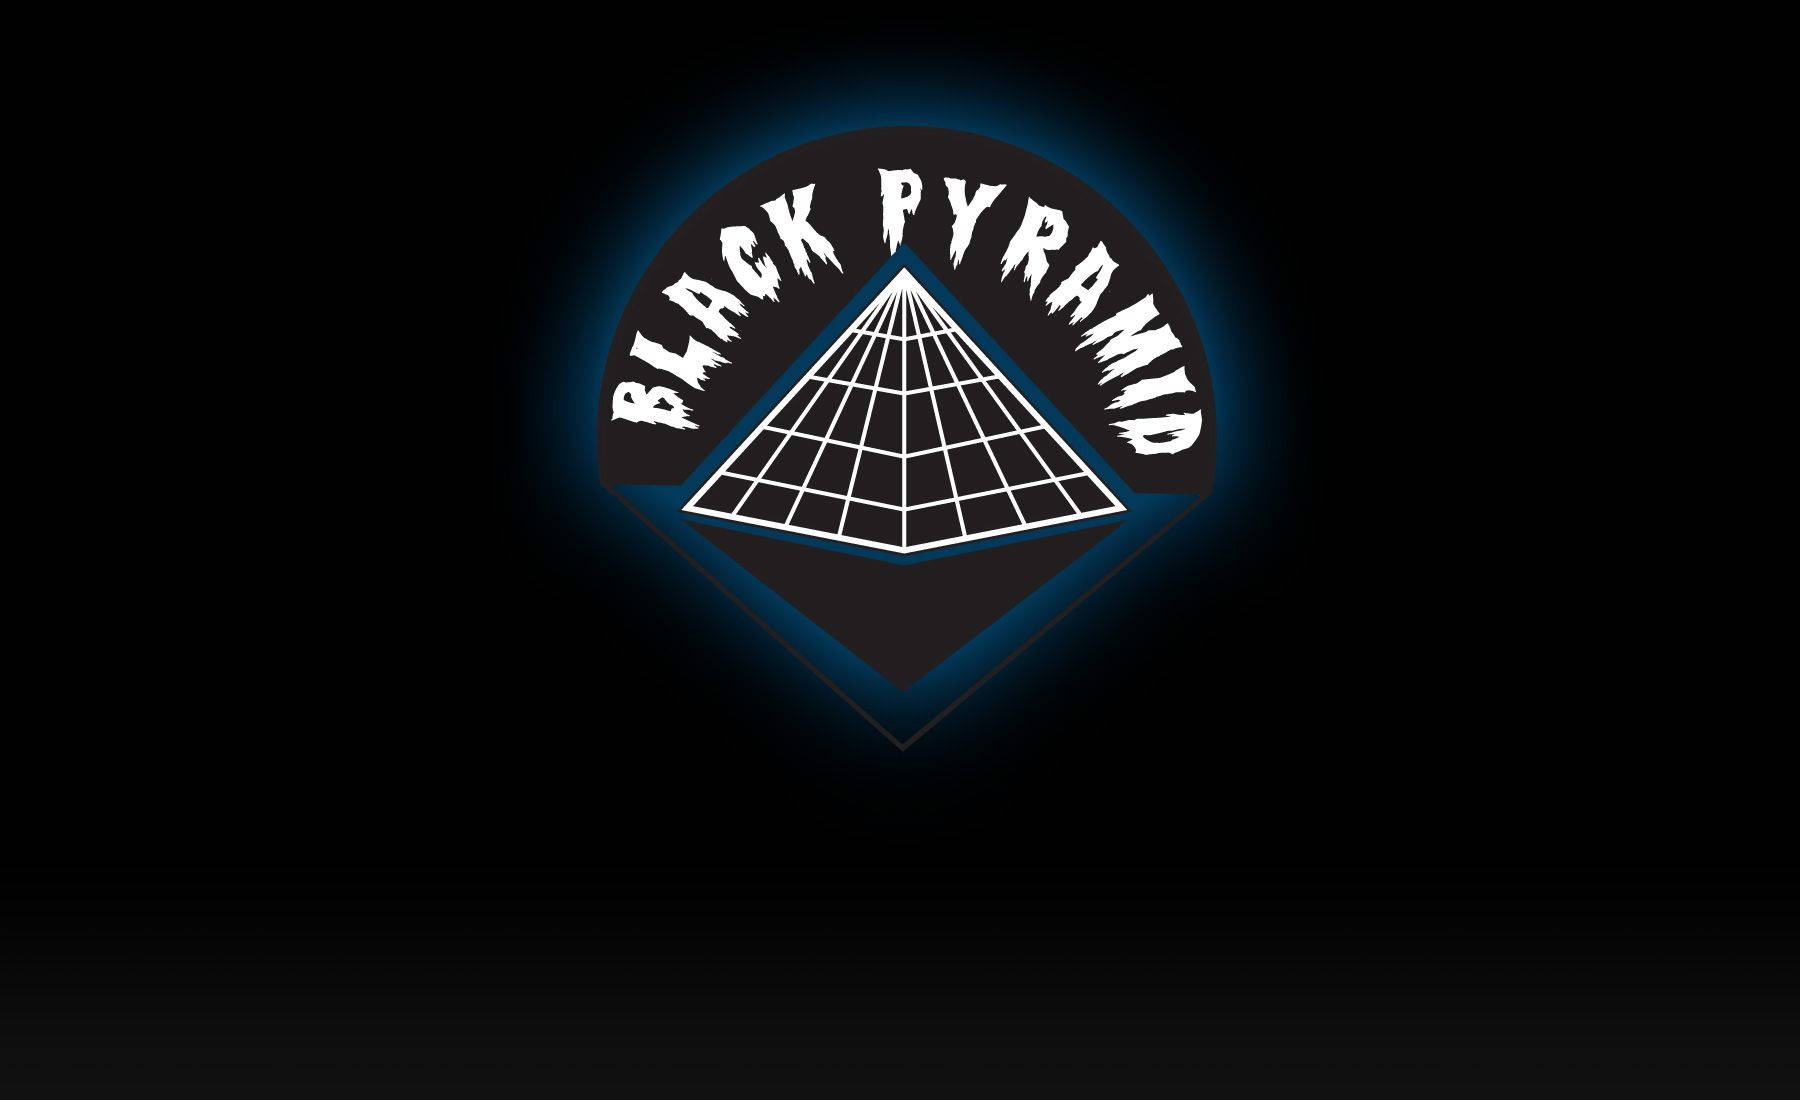 Caption: Captivating Black Pyramid With White Gridlines Background